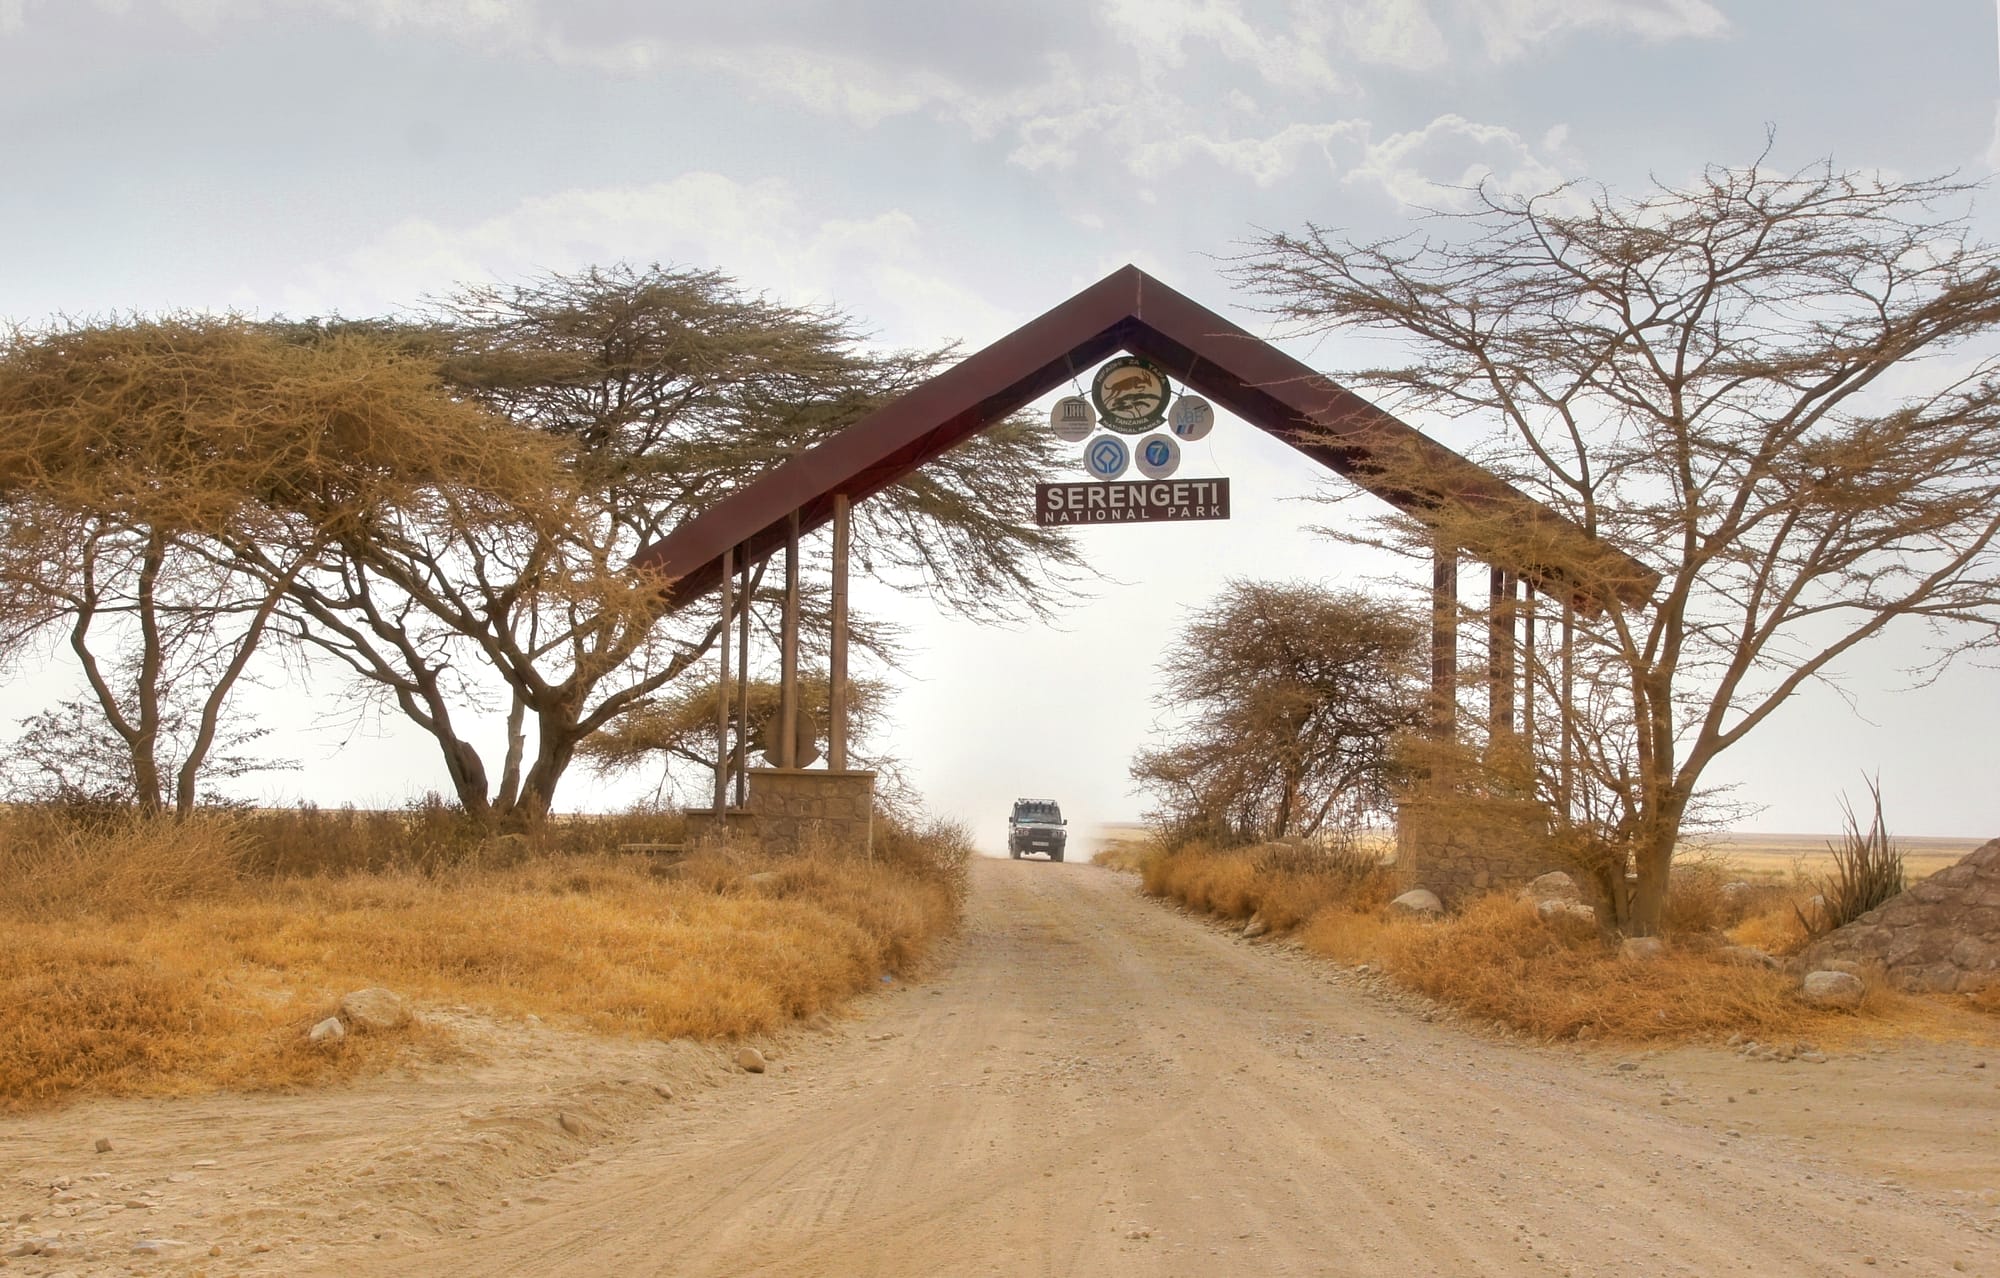 Park entrance outside of Arusha, Tanzania